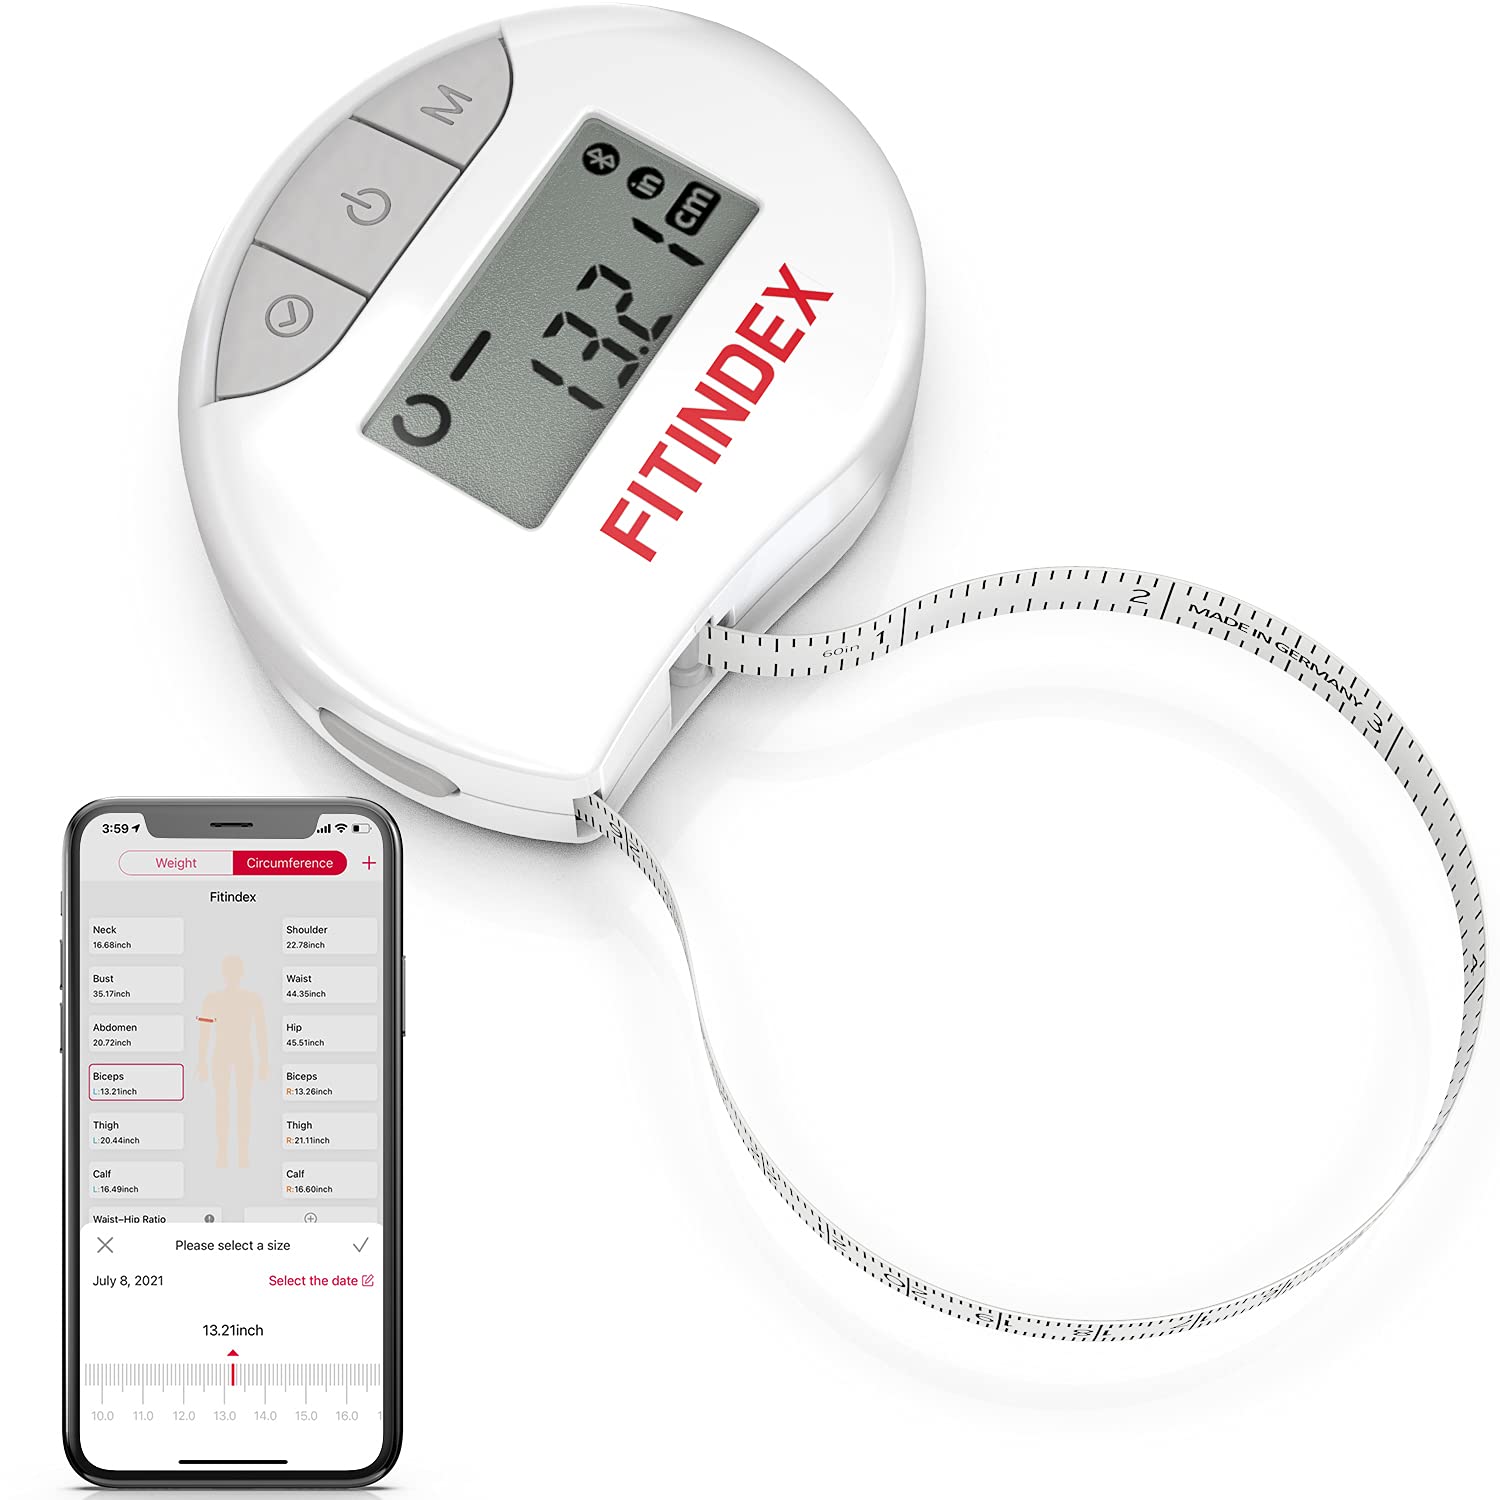 Lightstuff Digital Body Tape Measure - Smart Body Measuring Tape